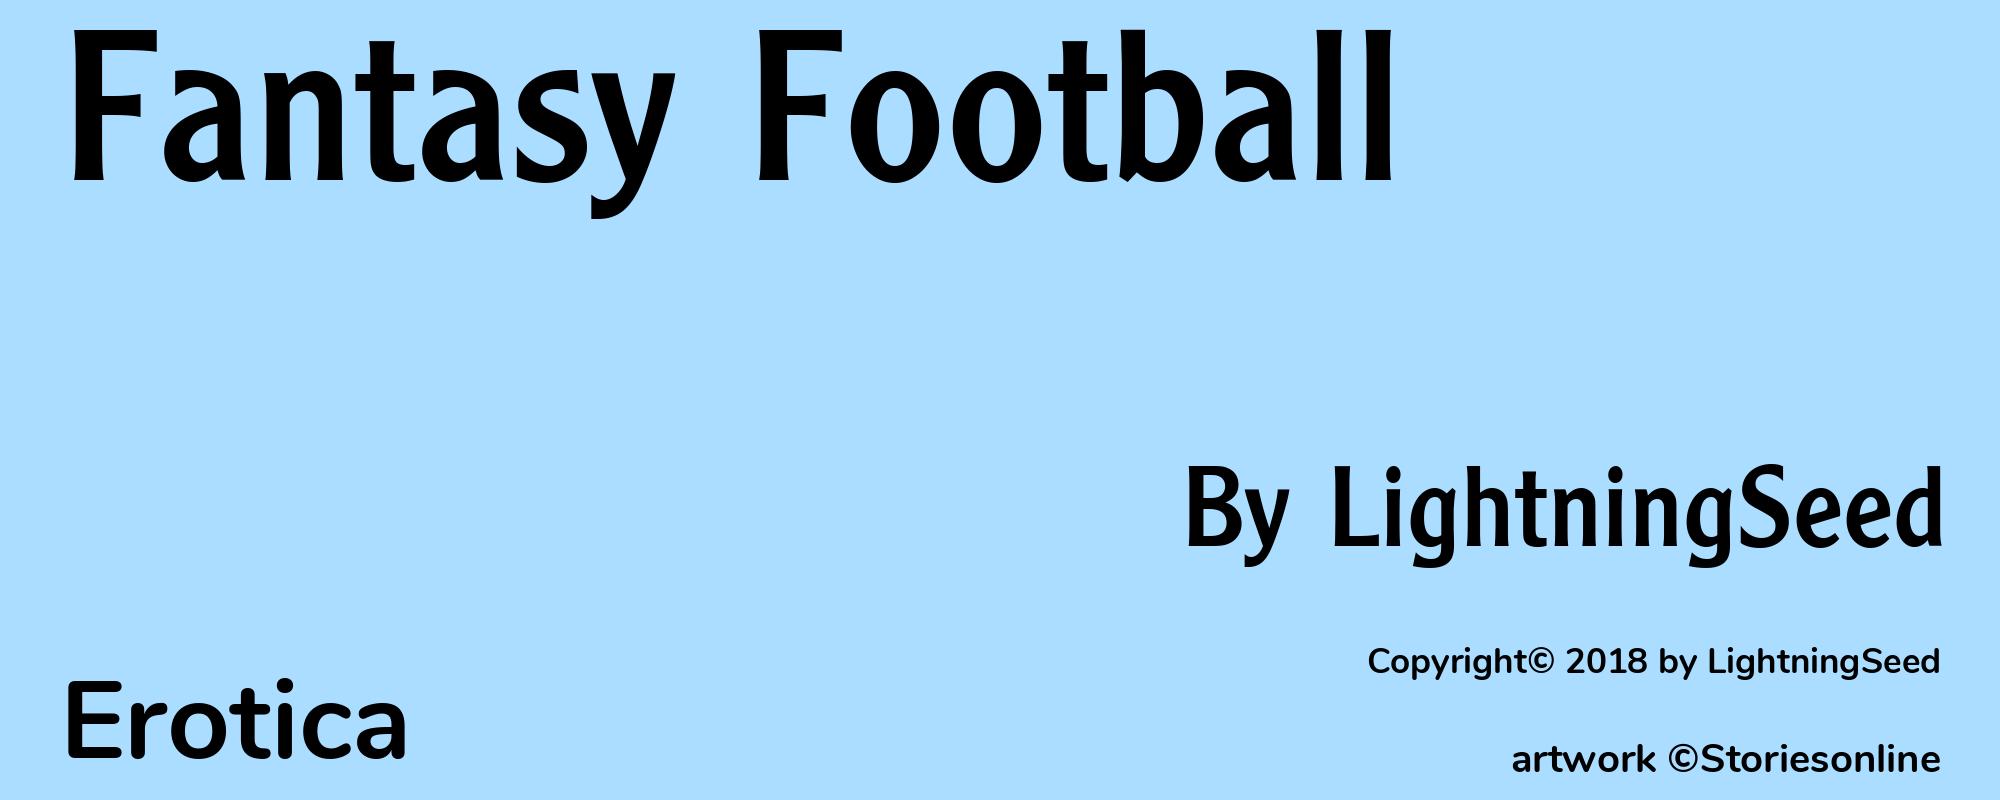 Fantasy Football - Cover